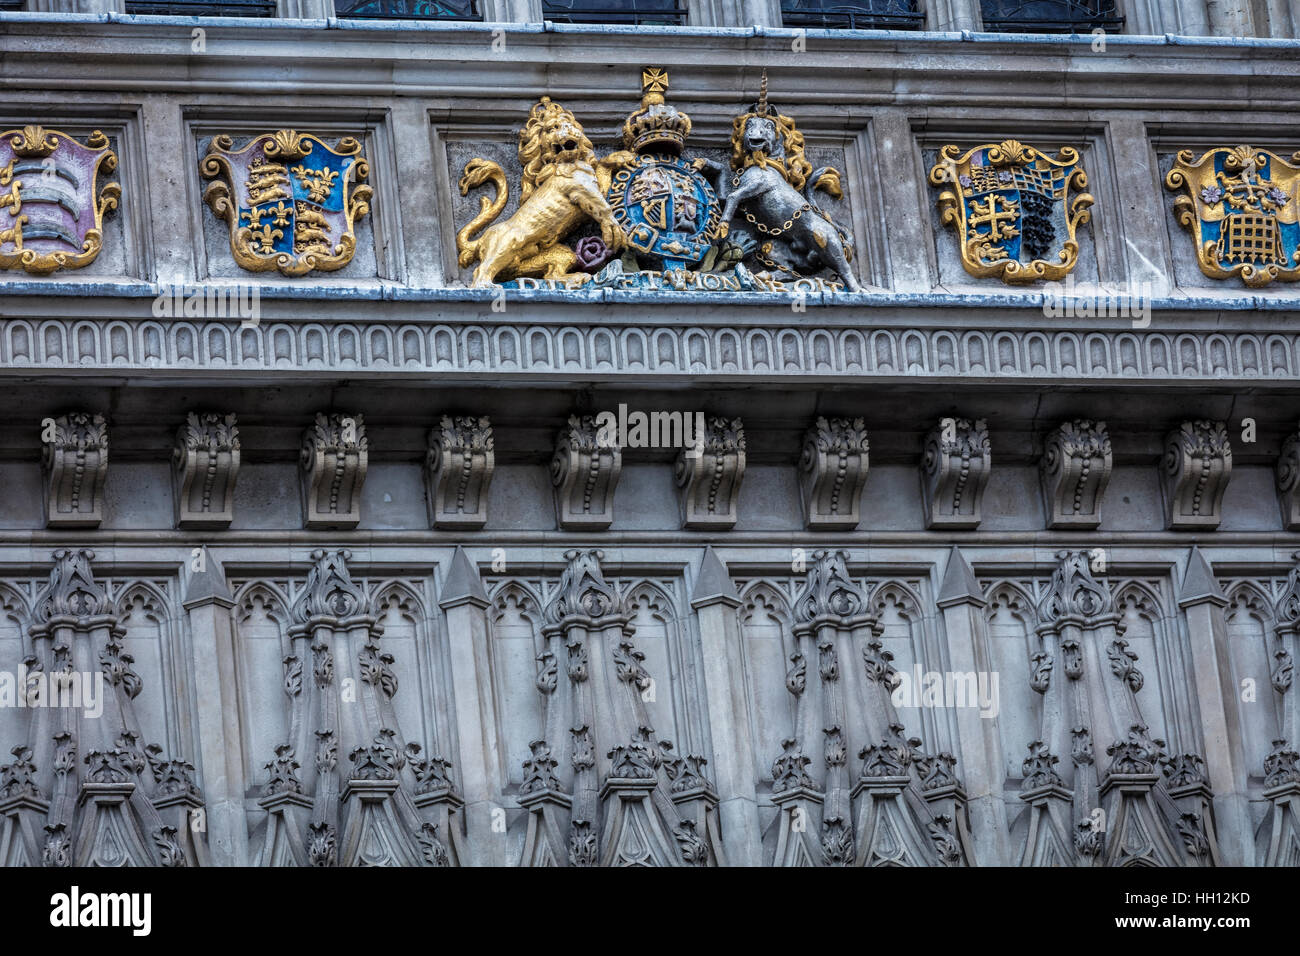 Insegne Regali fuori Abbazia di Westminster a Londra Inghilterra con stemmi Foto Stock